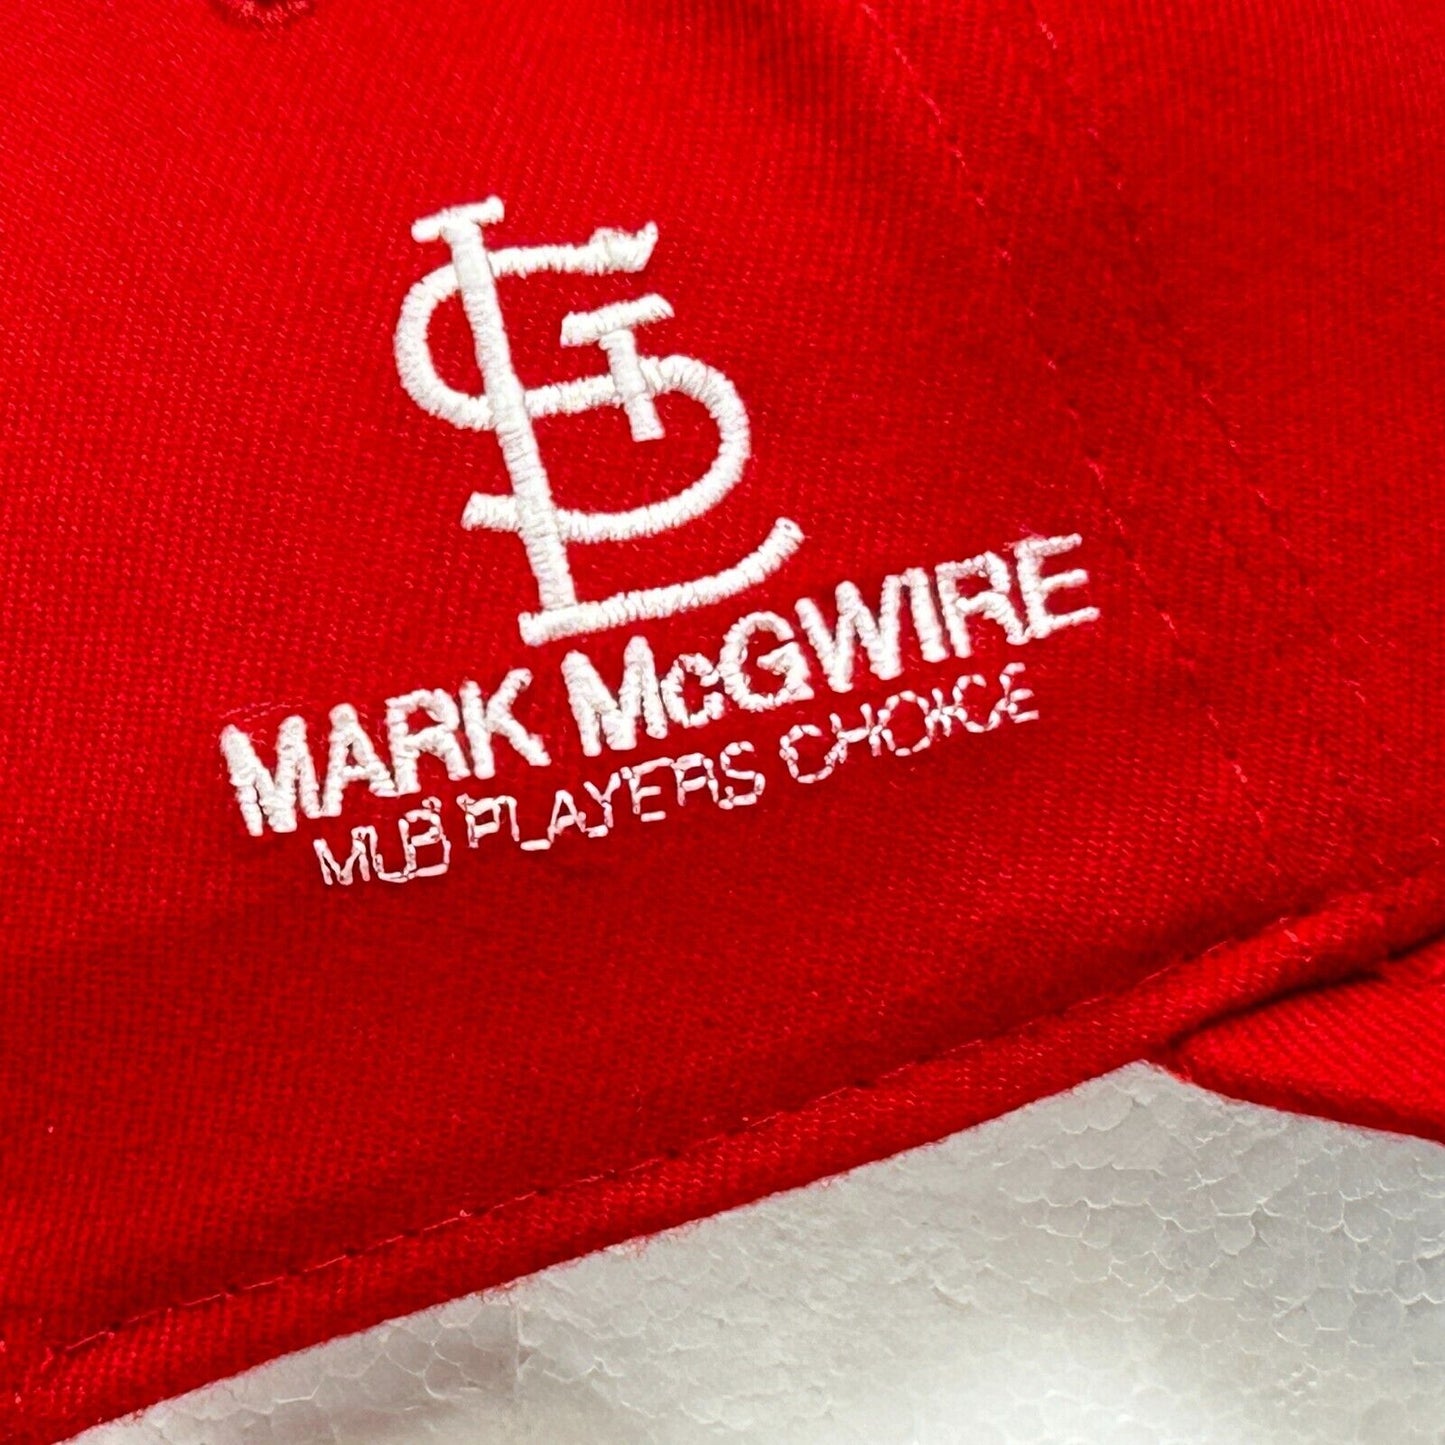 Mark McGwire 62 St Louis Cardinals Hat Vintage 90s New Era Snapback Baseball Cap